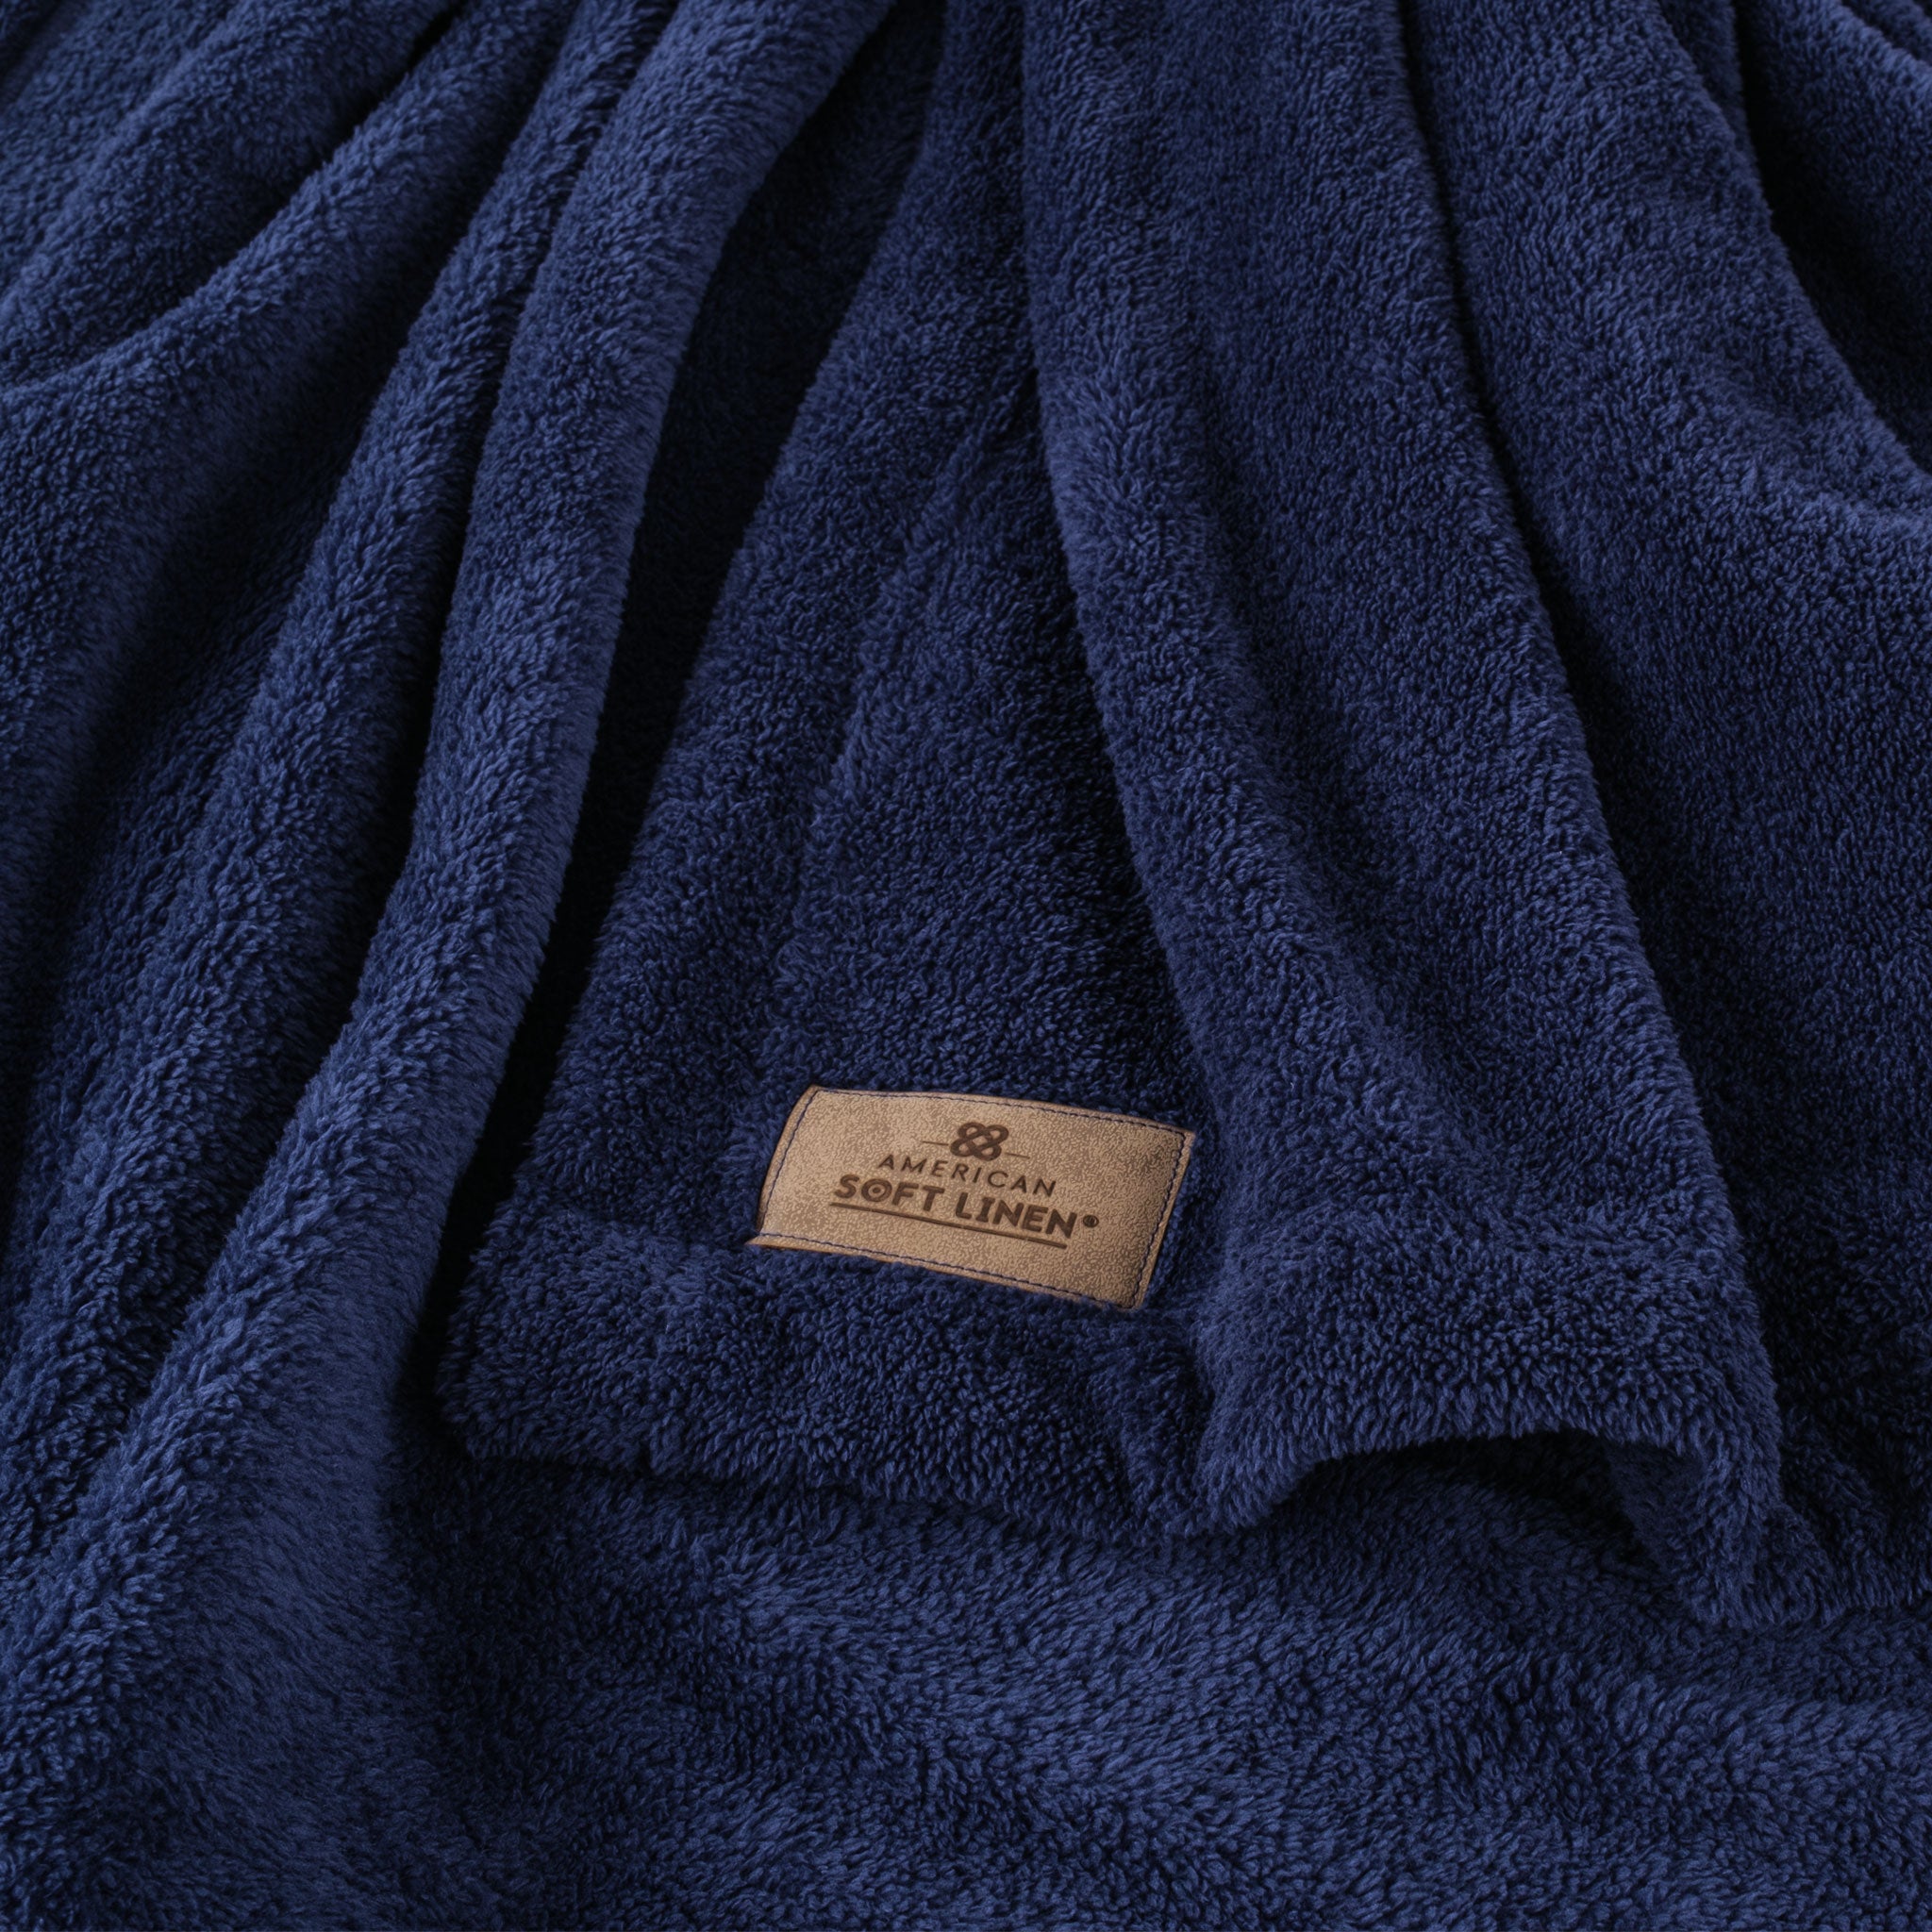 American Soft Linen - Bedding Fleece Blanket - Wholesale - 9 Set Case Pack - Queen Size 85x90 inches - Navy-Blue - 4